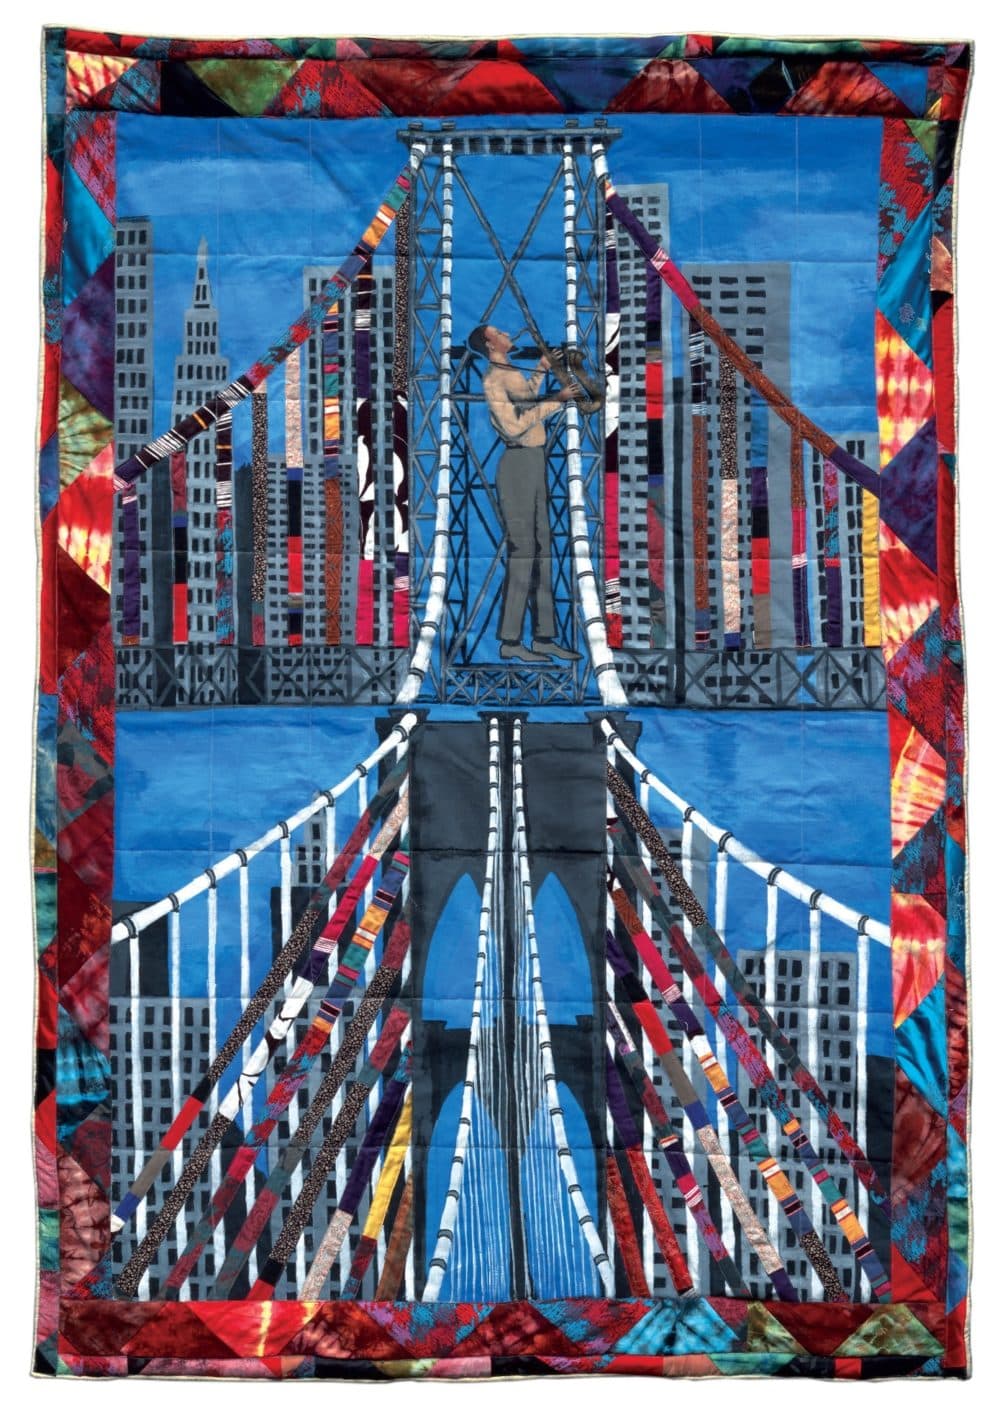 Faith Ringgold, Sonny’s Bridge, 1986. © Faith Ringgold / ARS, NY and DACS, London, courtesy ACA Galleries, New York 2022 (Courtesy)